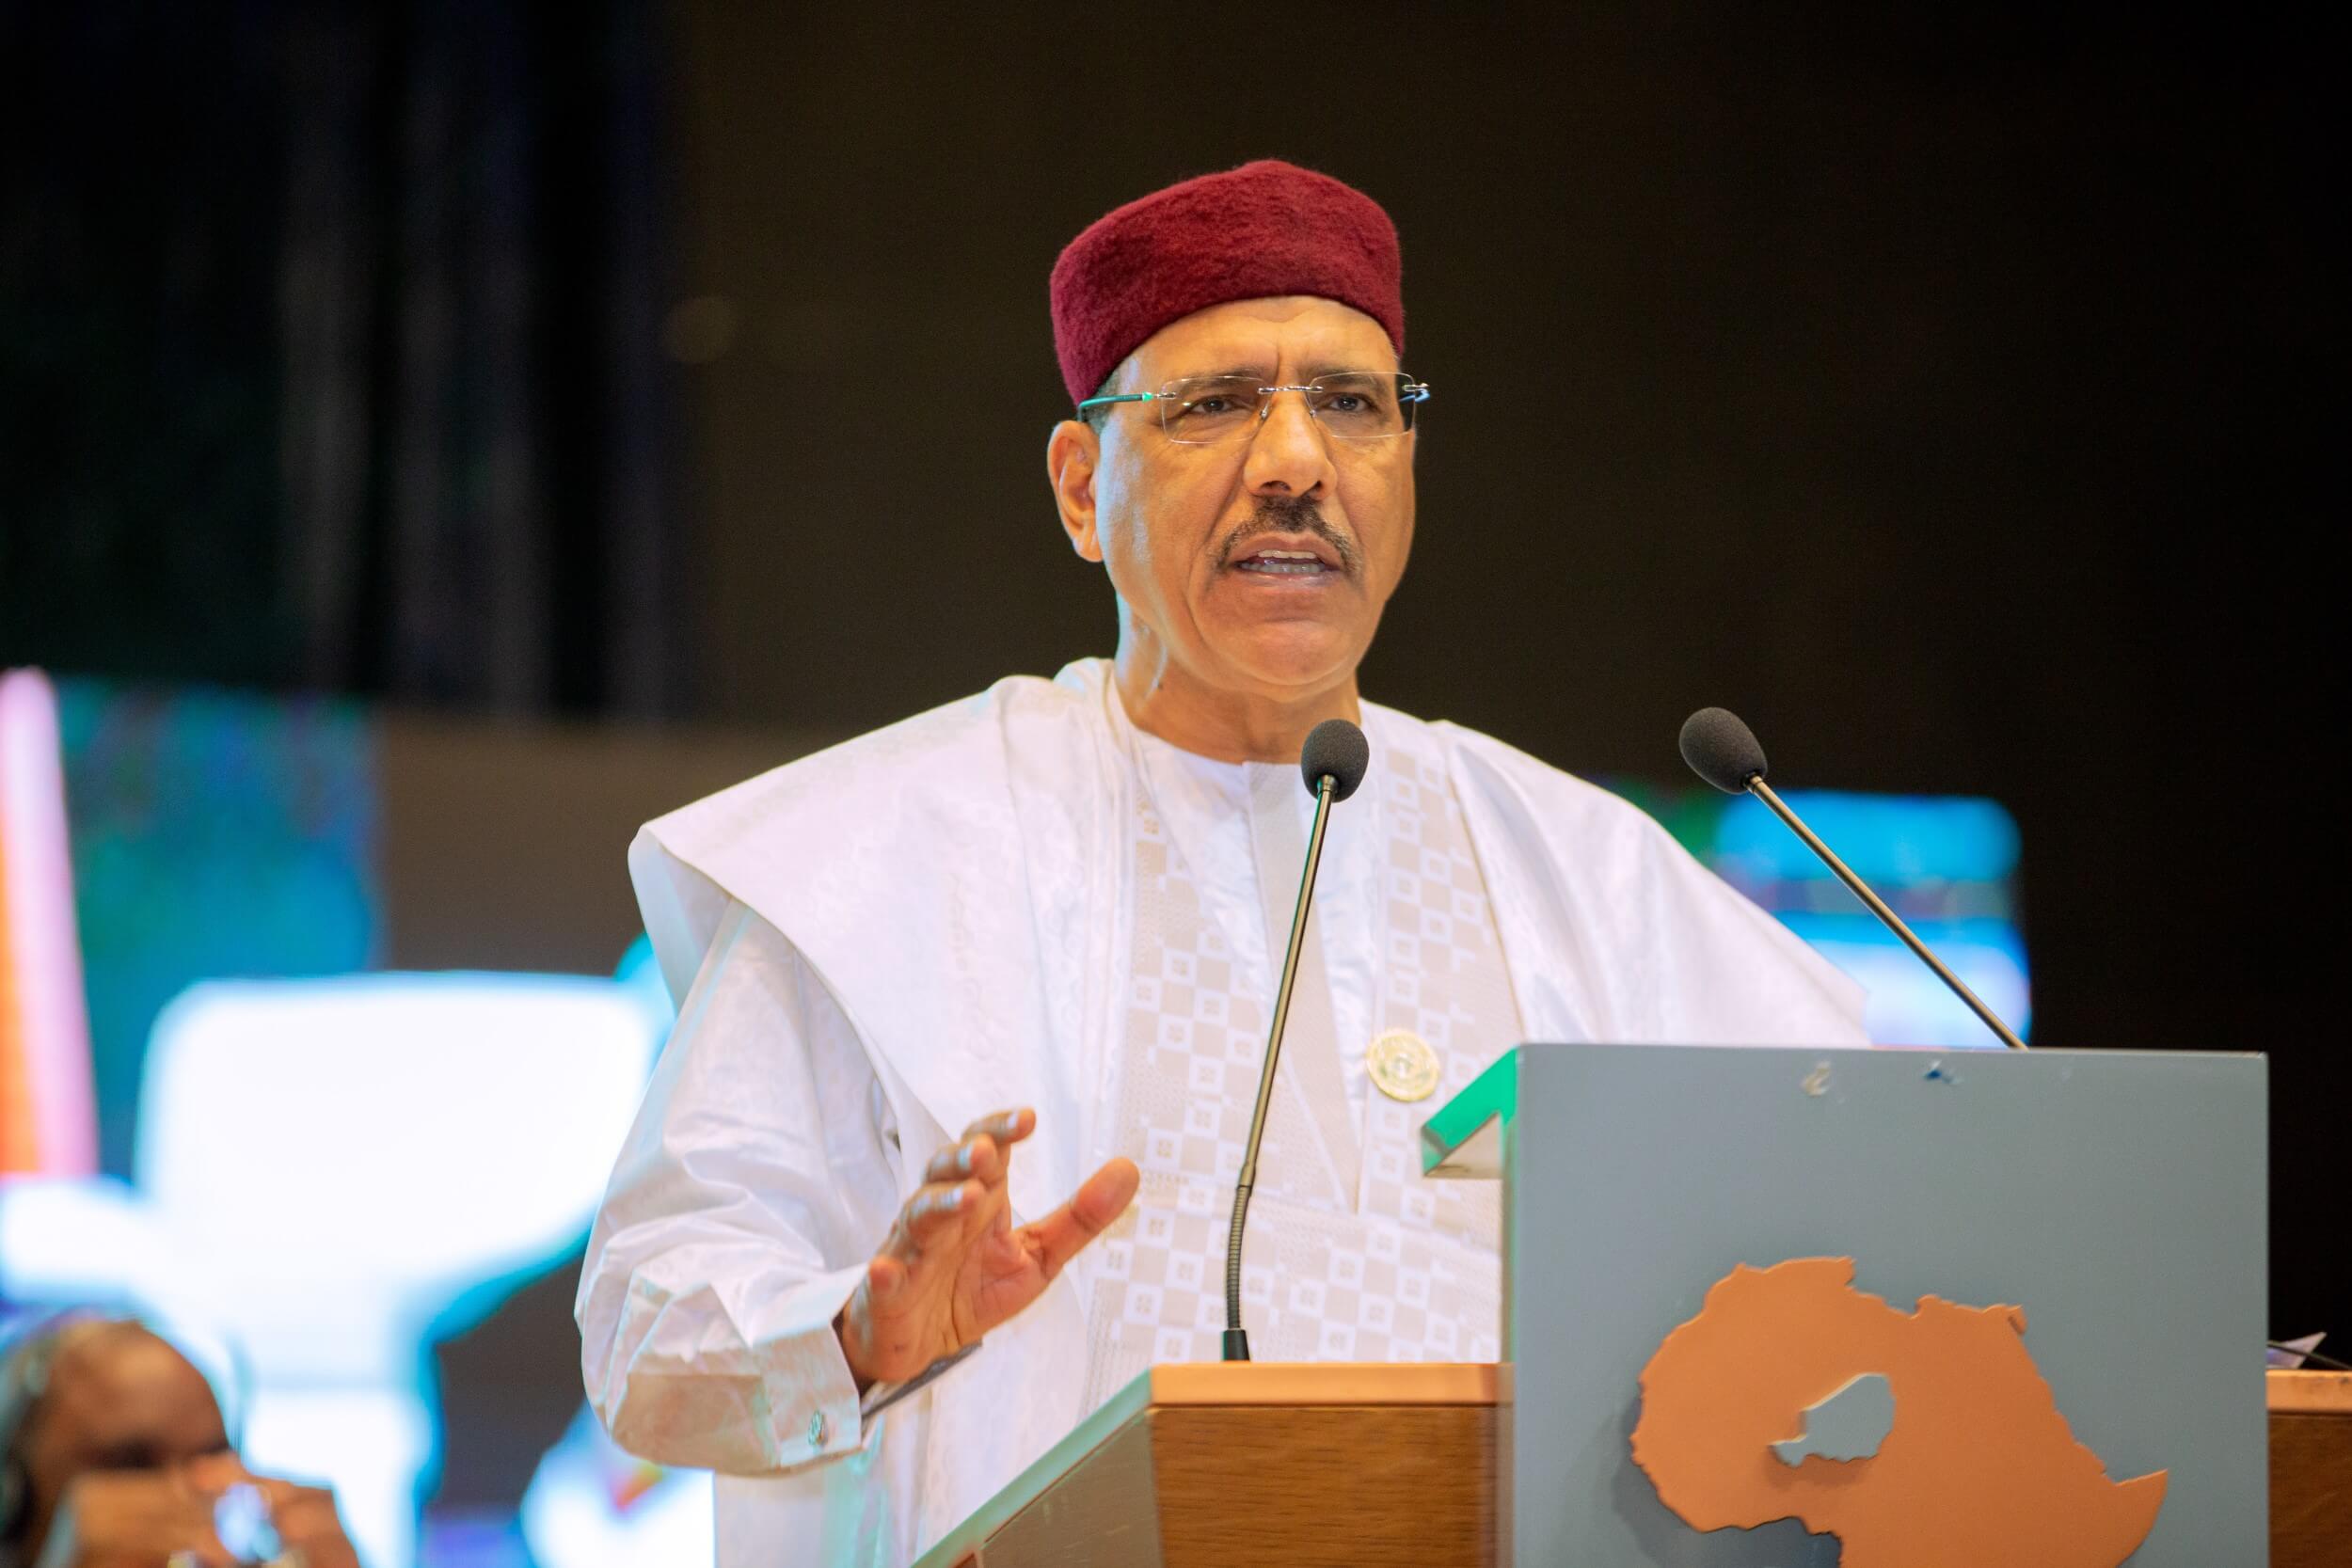 Breaking: President Mohamed Bazoum of Niger held in coup attempt